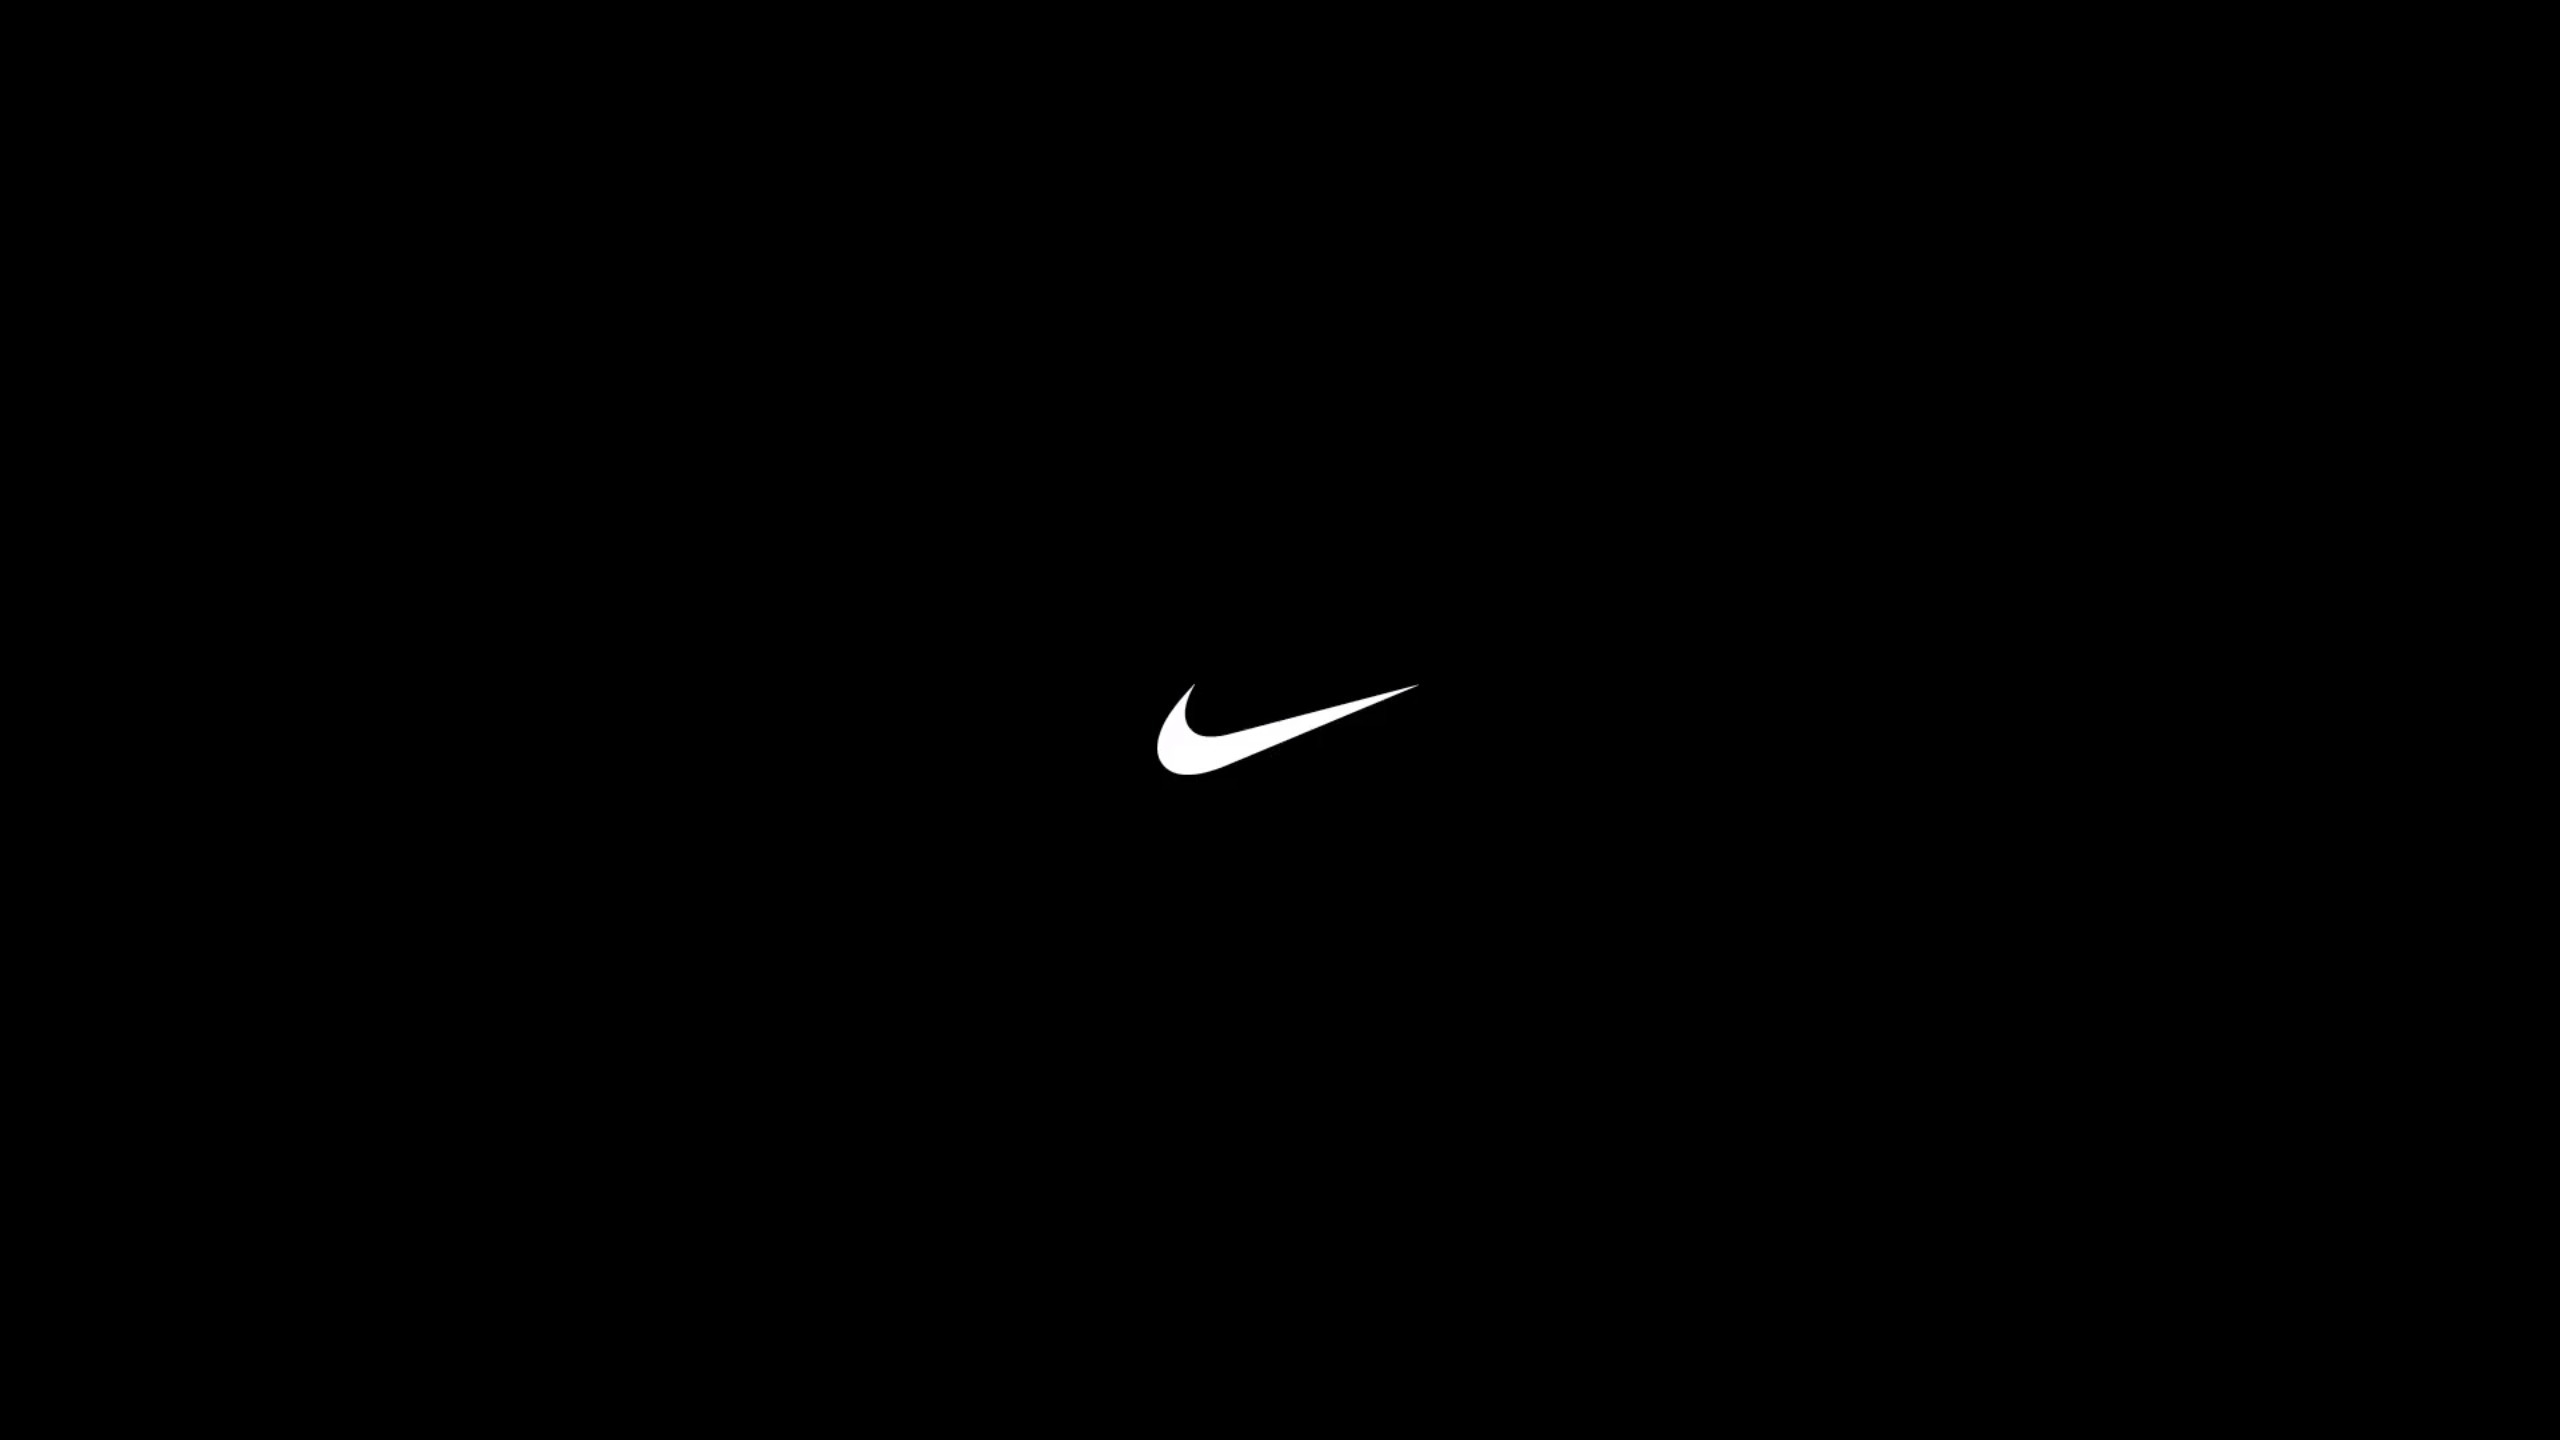 Simple Nike Logo Hd Wallpaper Wallpaperfx